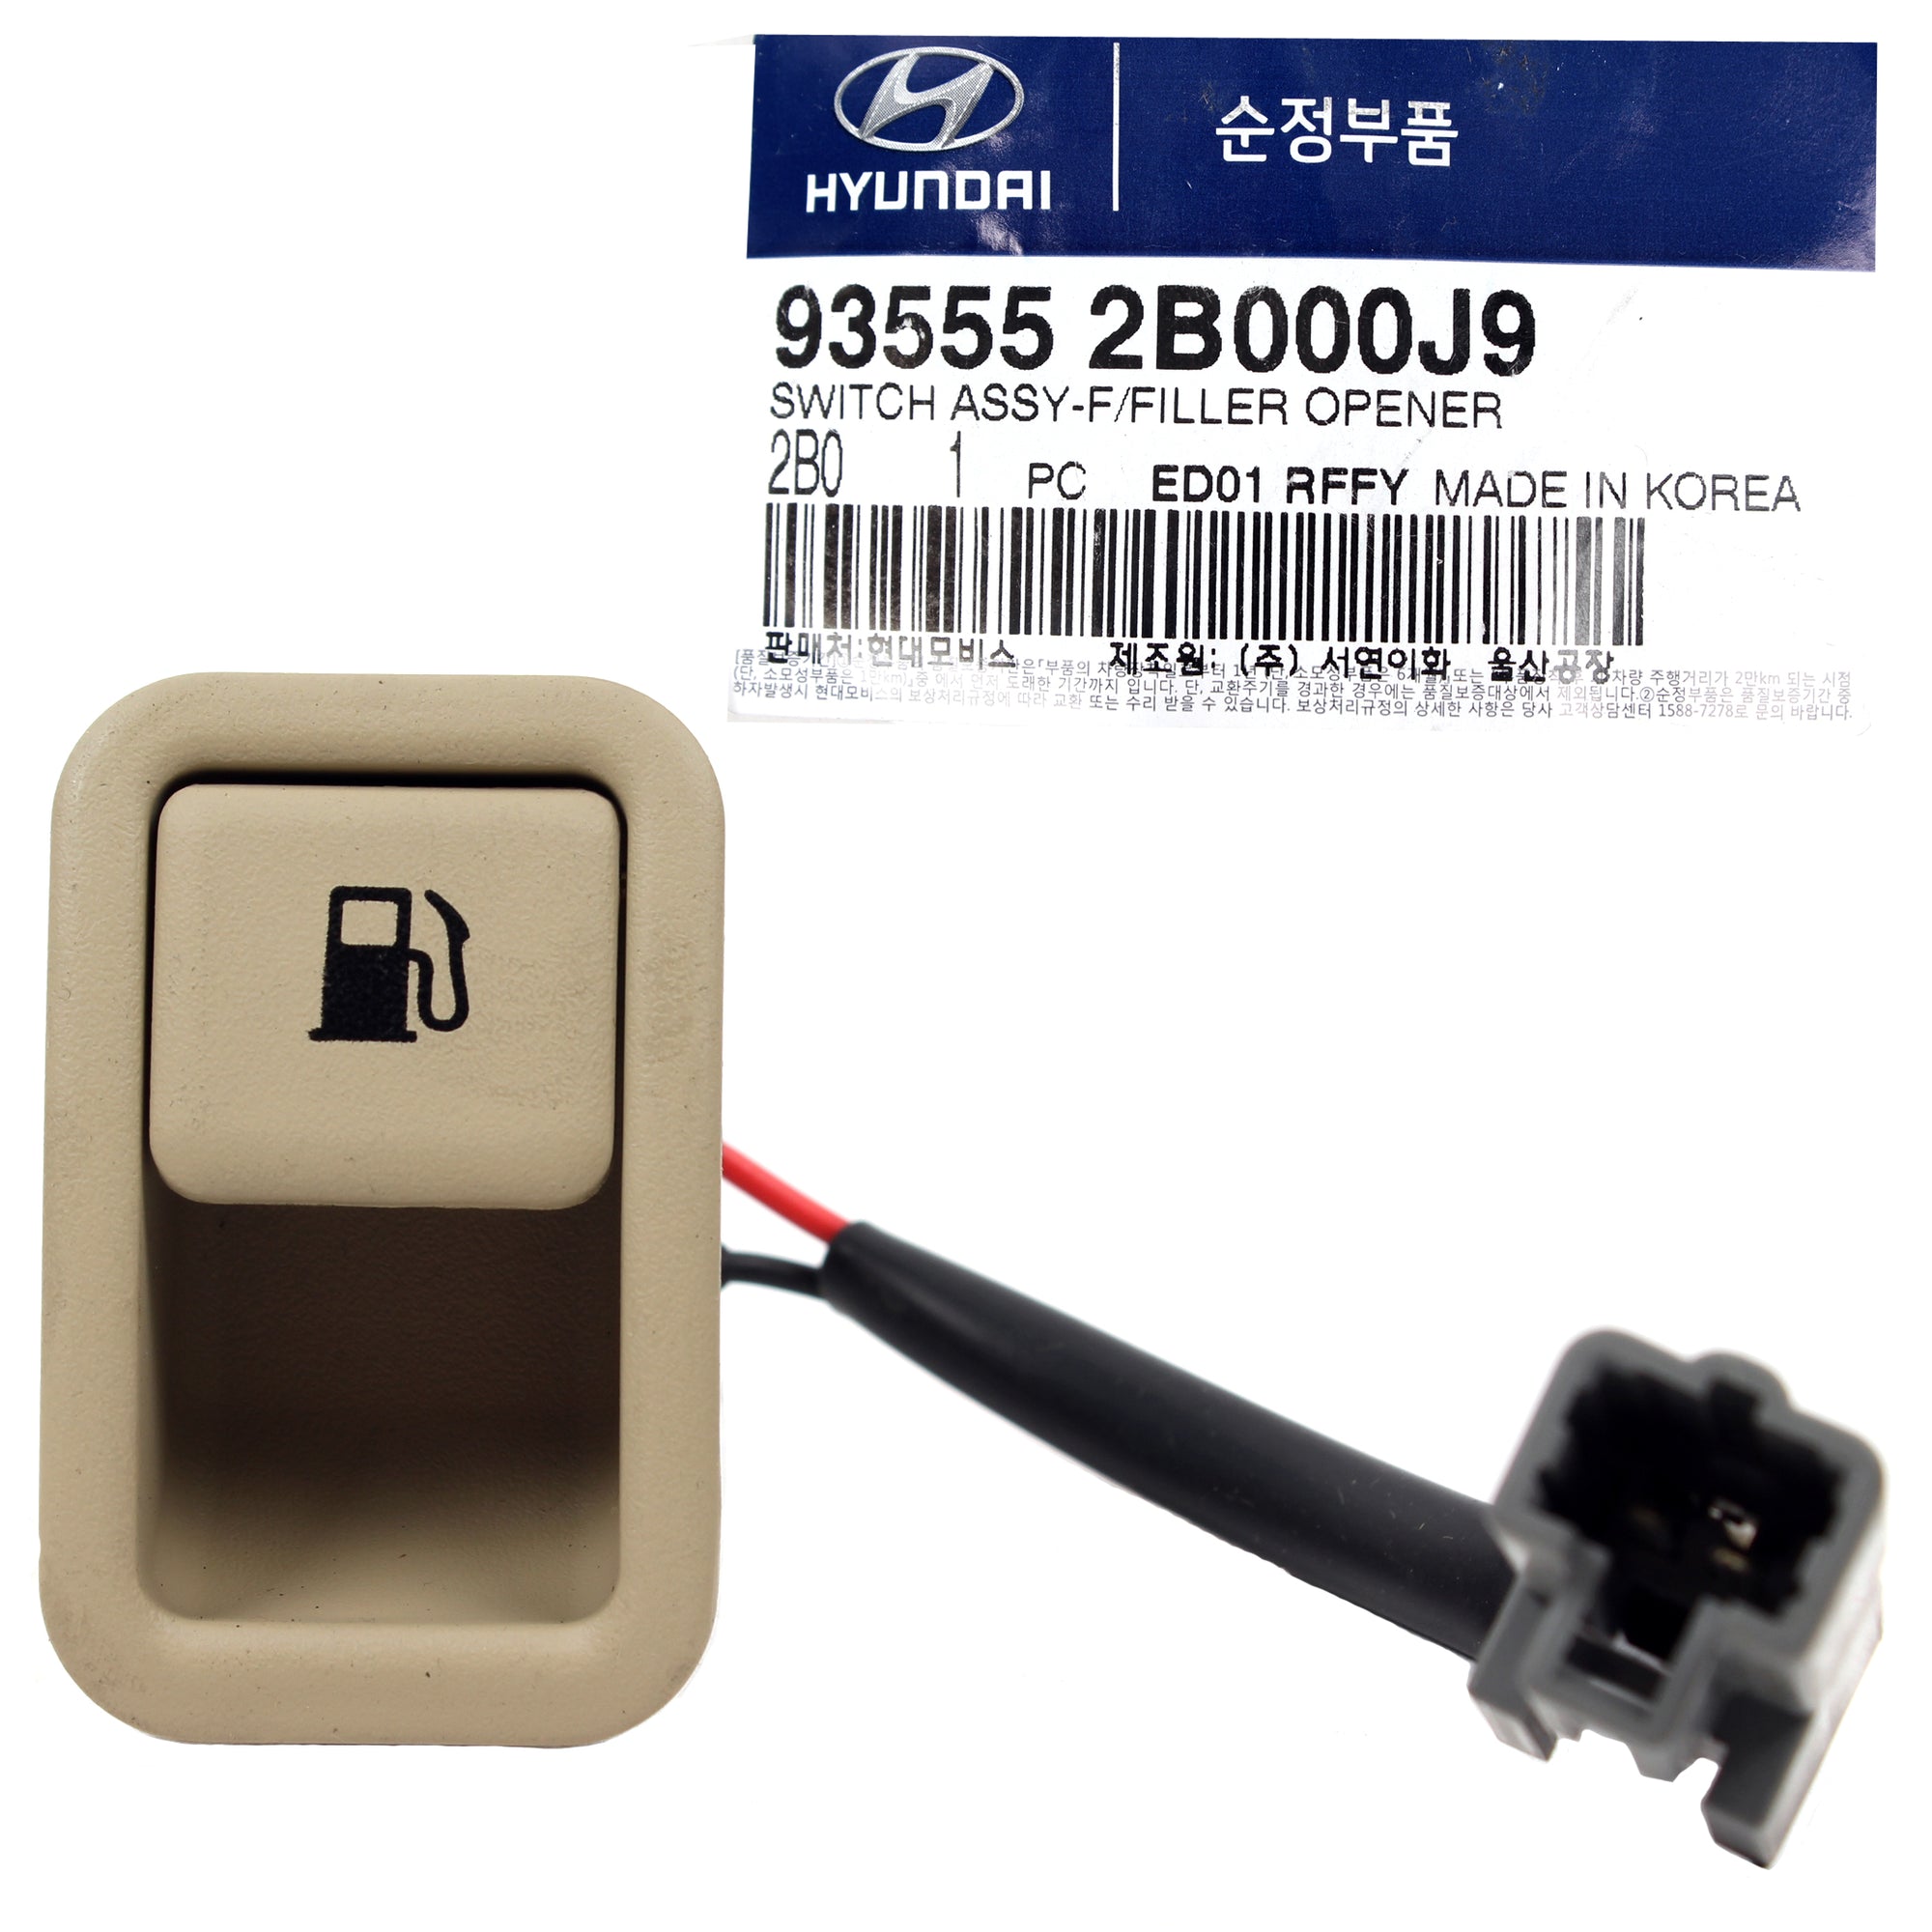 GENUINE Fuel Gas Door Switch Beige for 07-09 Hyundai Santa Fe 935552B000J9